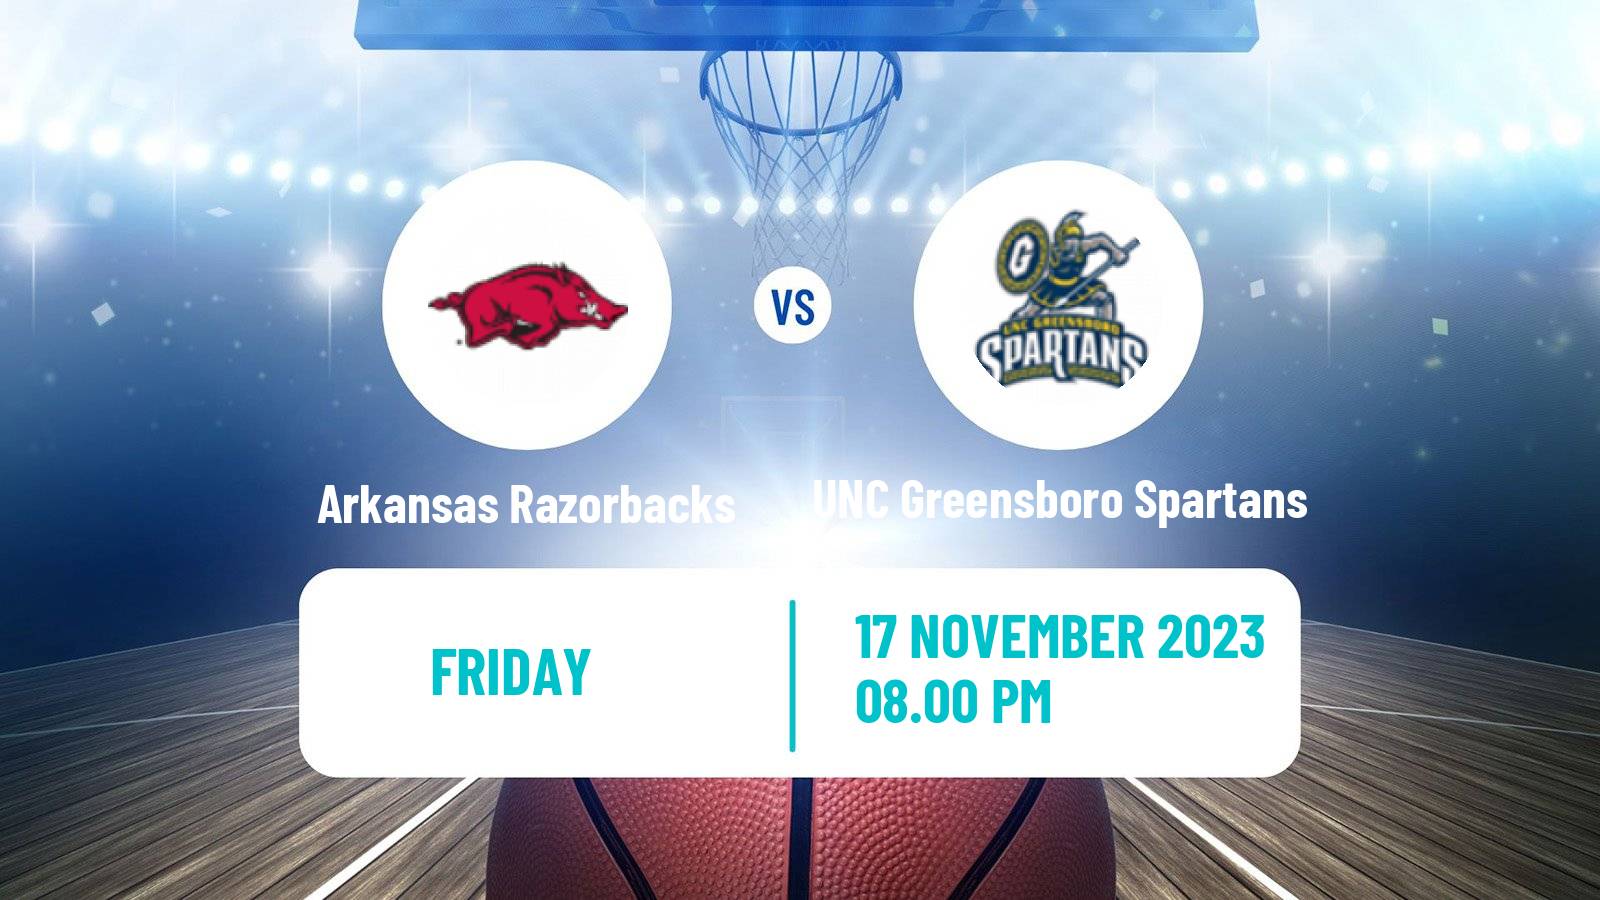 Basketball NCAA College Basketball Arkansas Razorbacks - UNC Greensboro Spartans